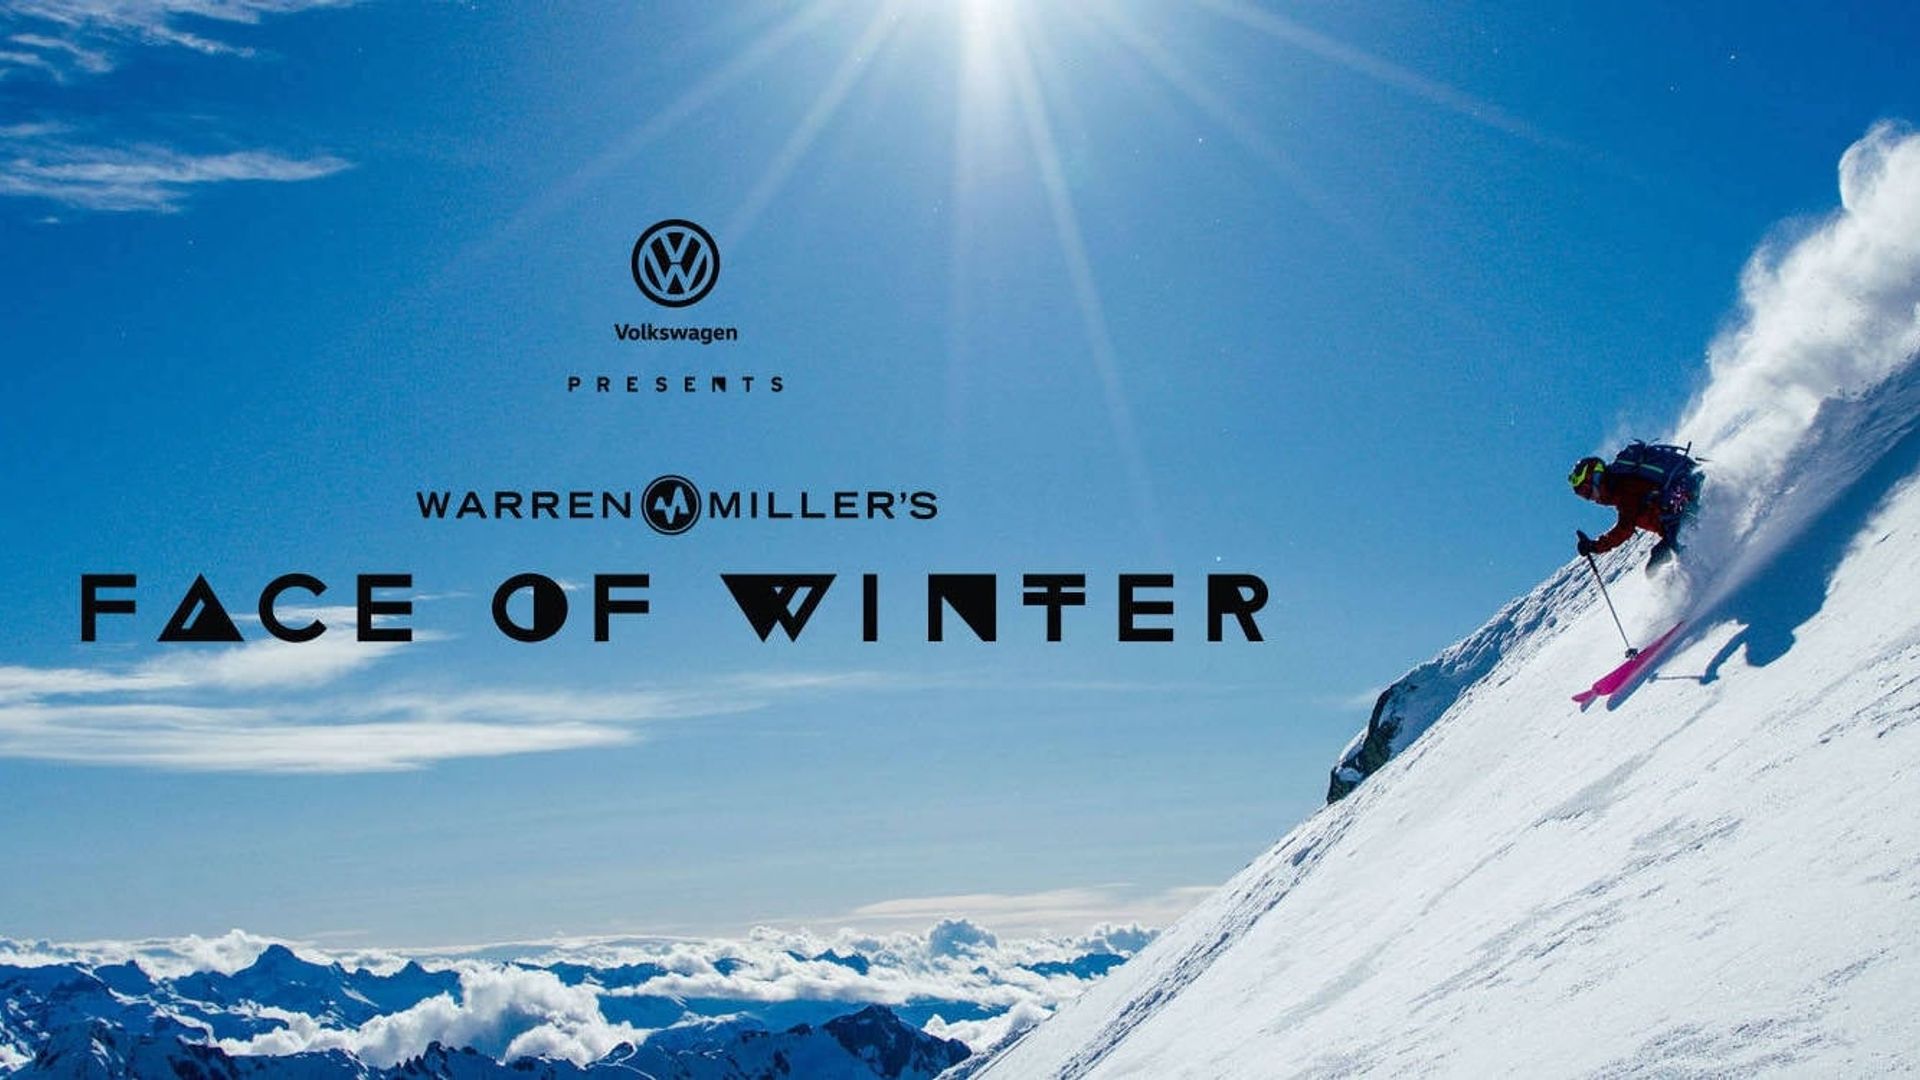 Warren Miller's Face of Winter background